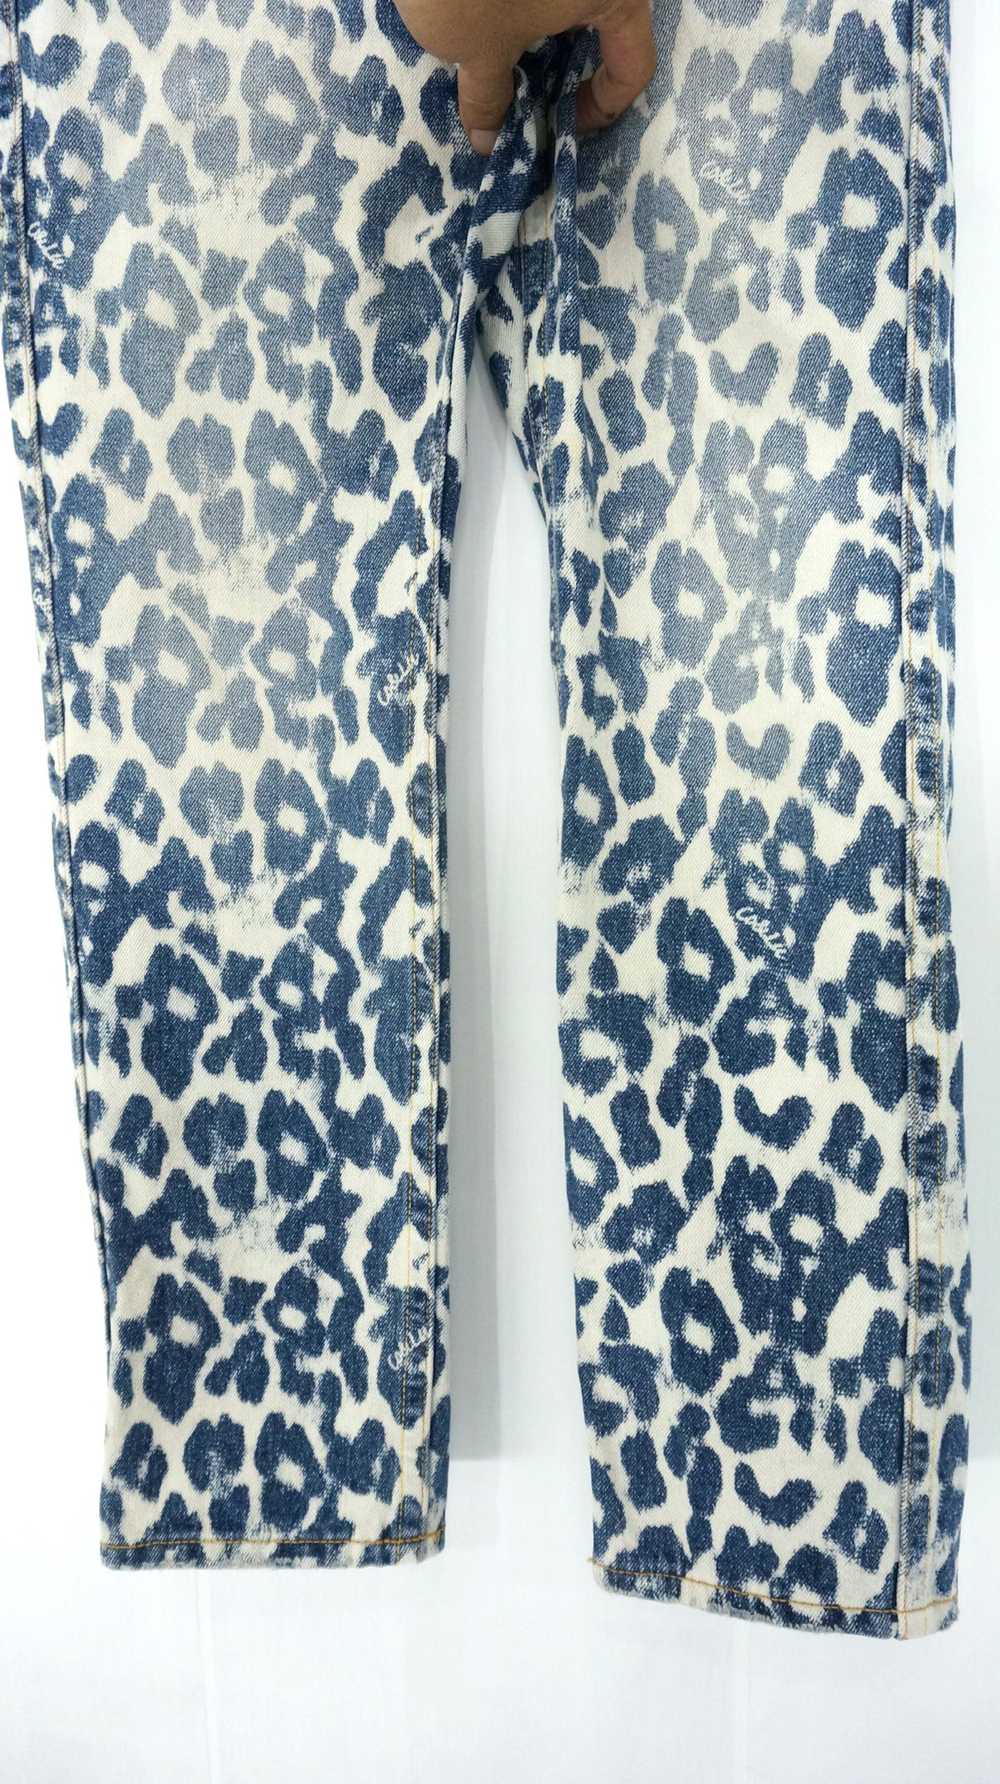 Japanese Brand CO & LU Leopard Print Jeans - image 6